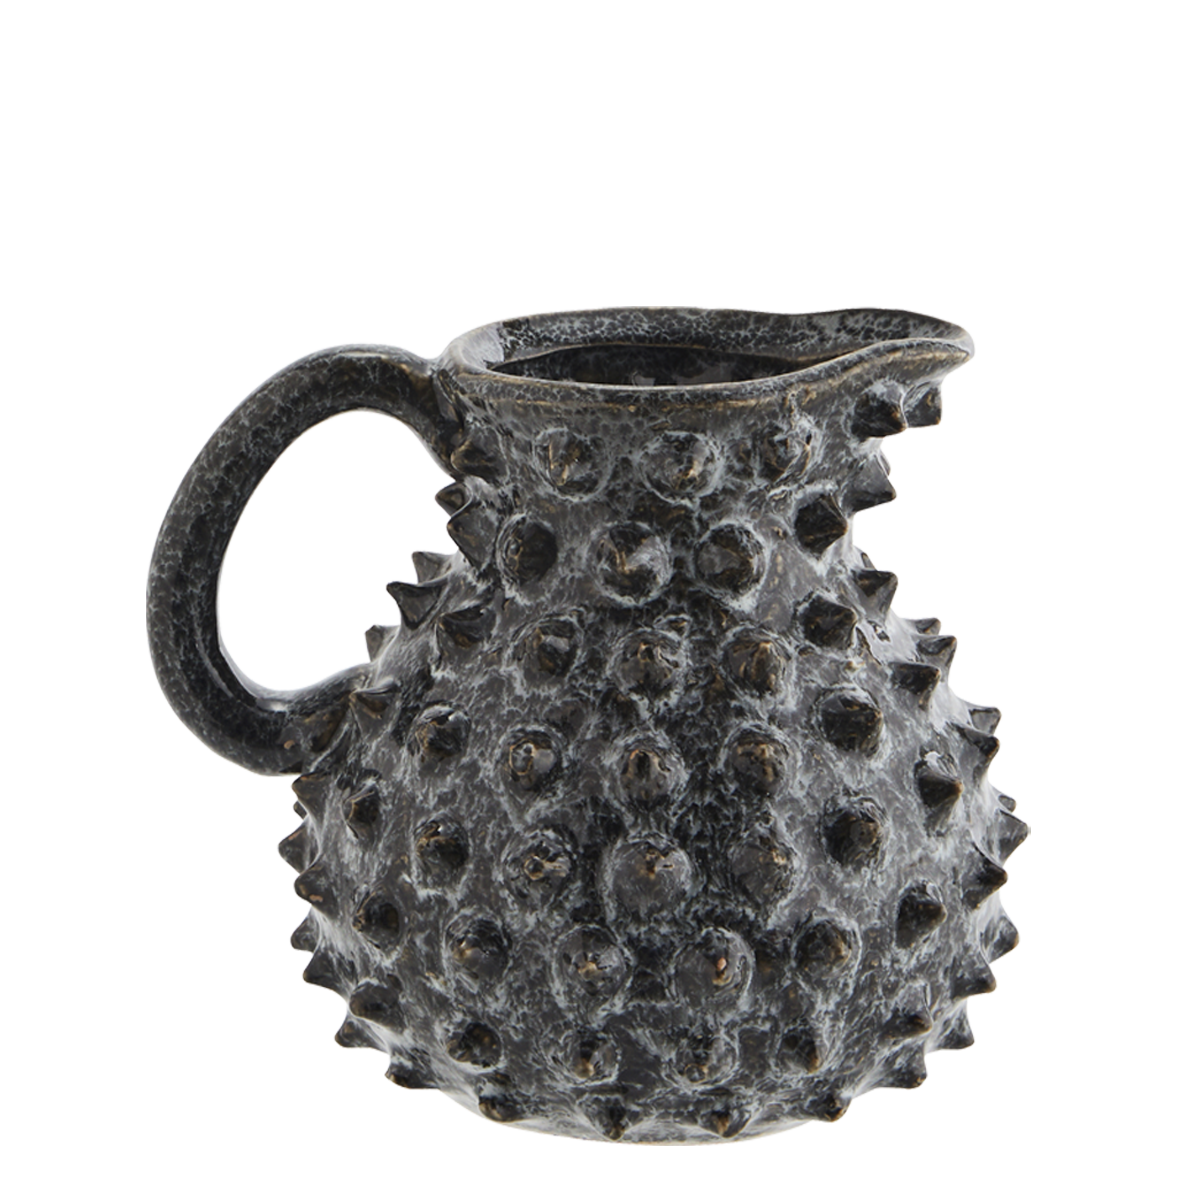 Stoneware jug w/ spikes